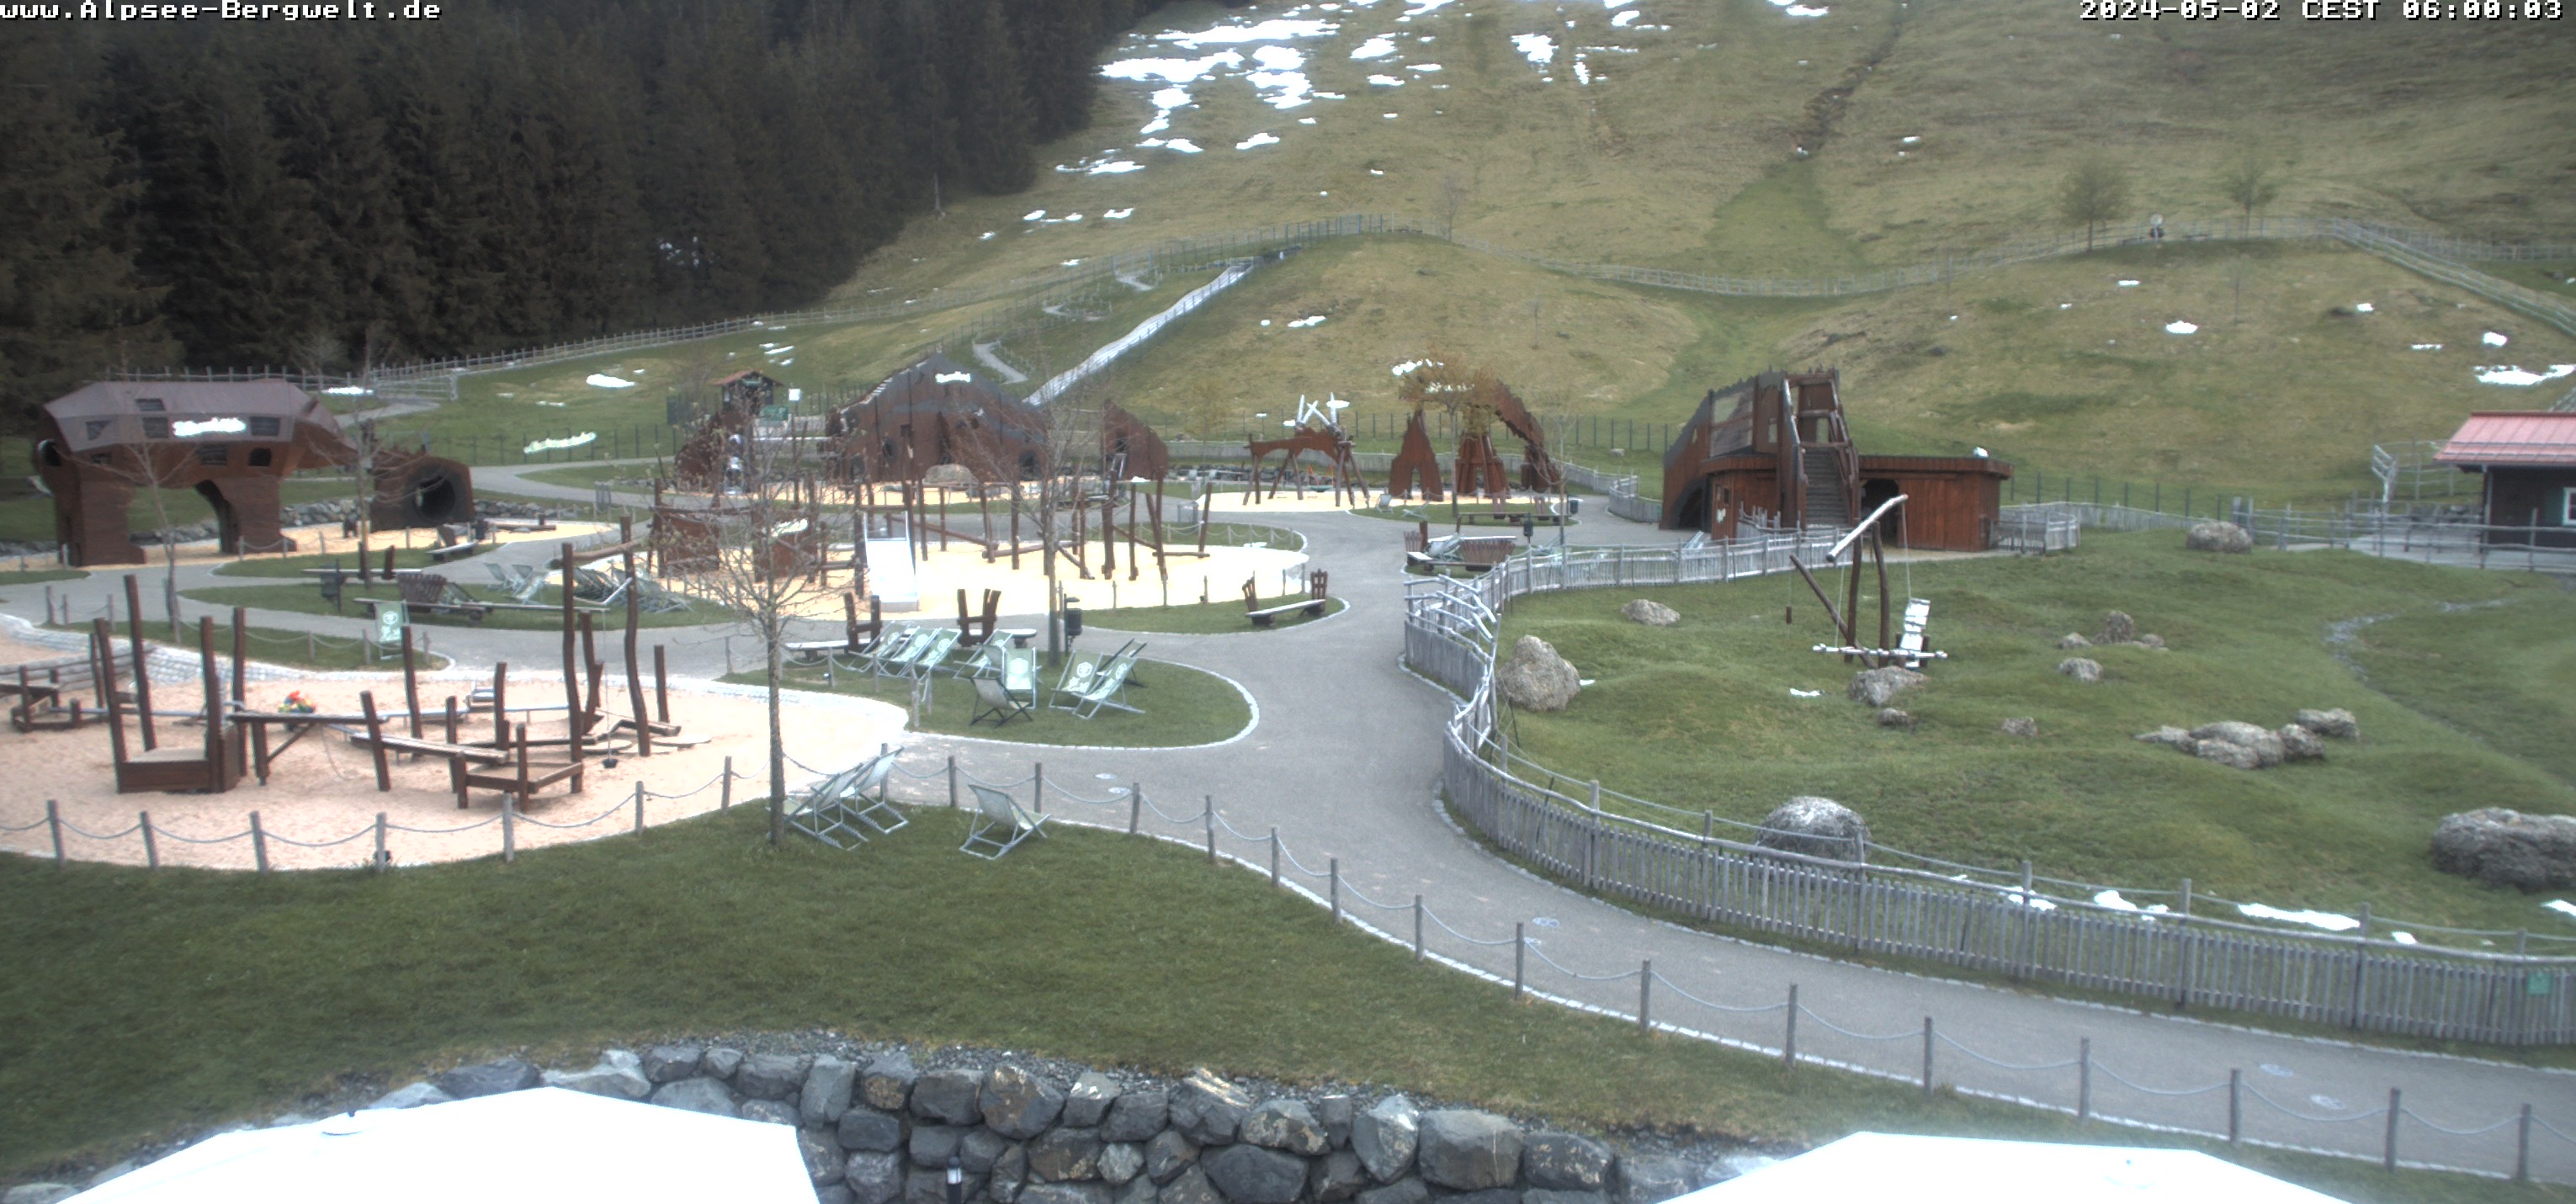 Webcam Alpsee Bergwelt